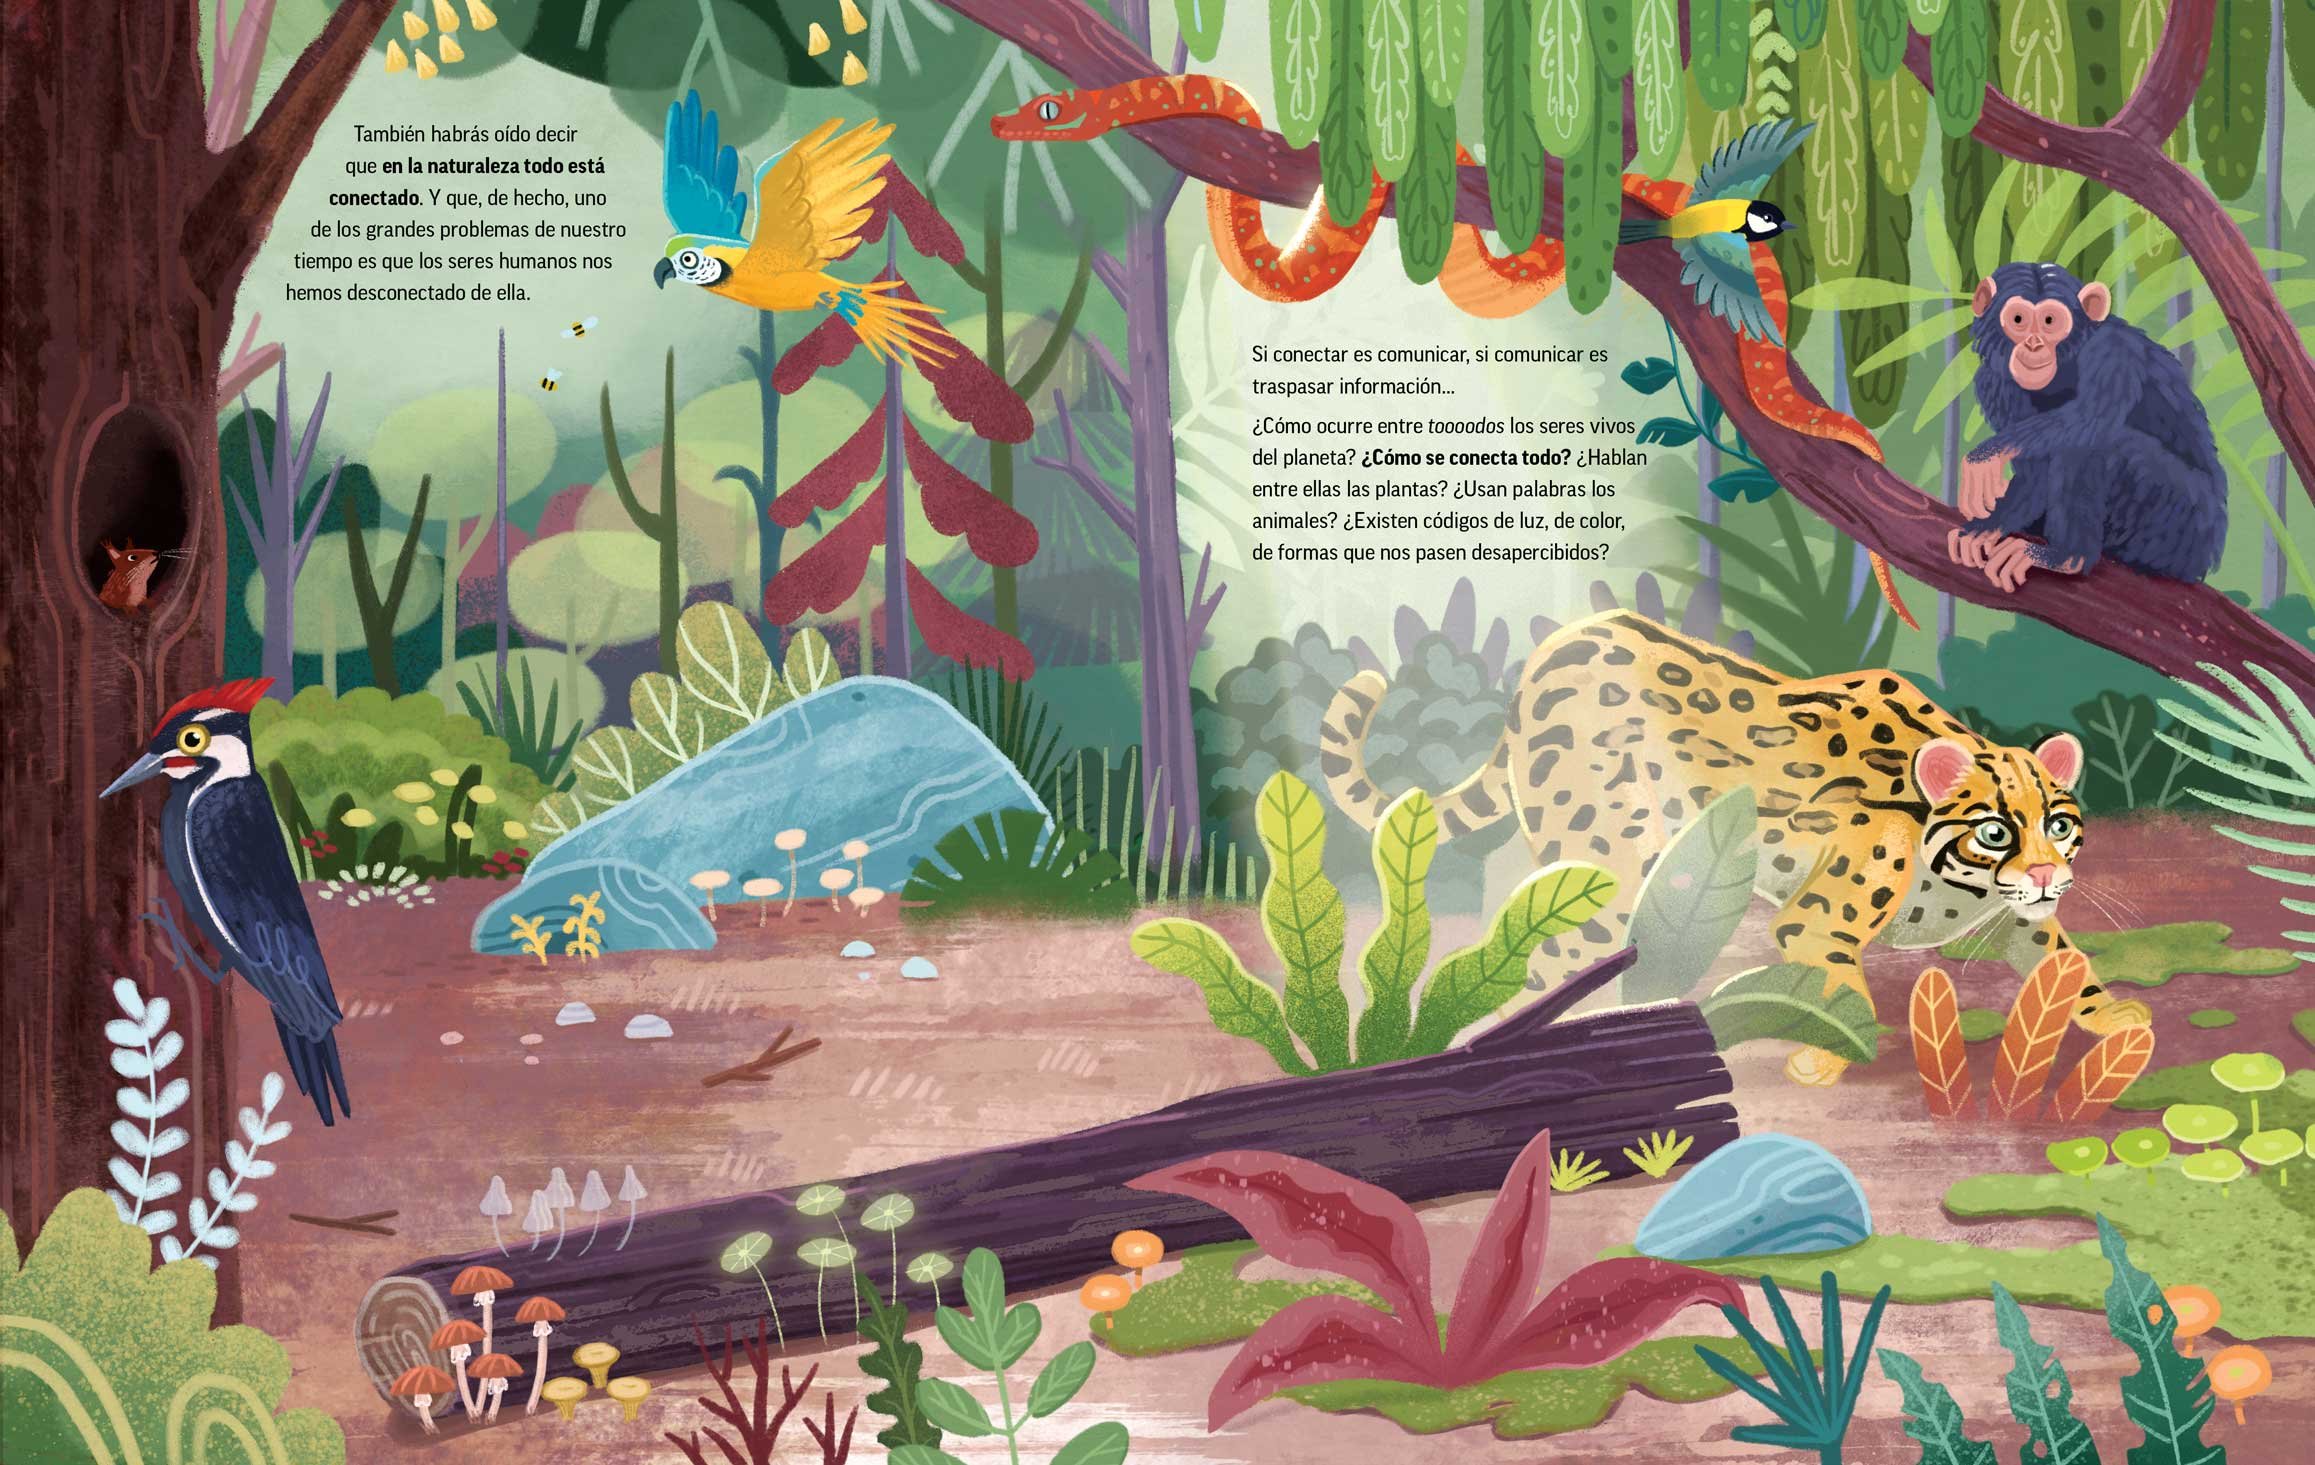 asia_orlando-illustrated-book_nature-animals_spread 1.jpg